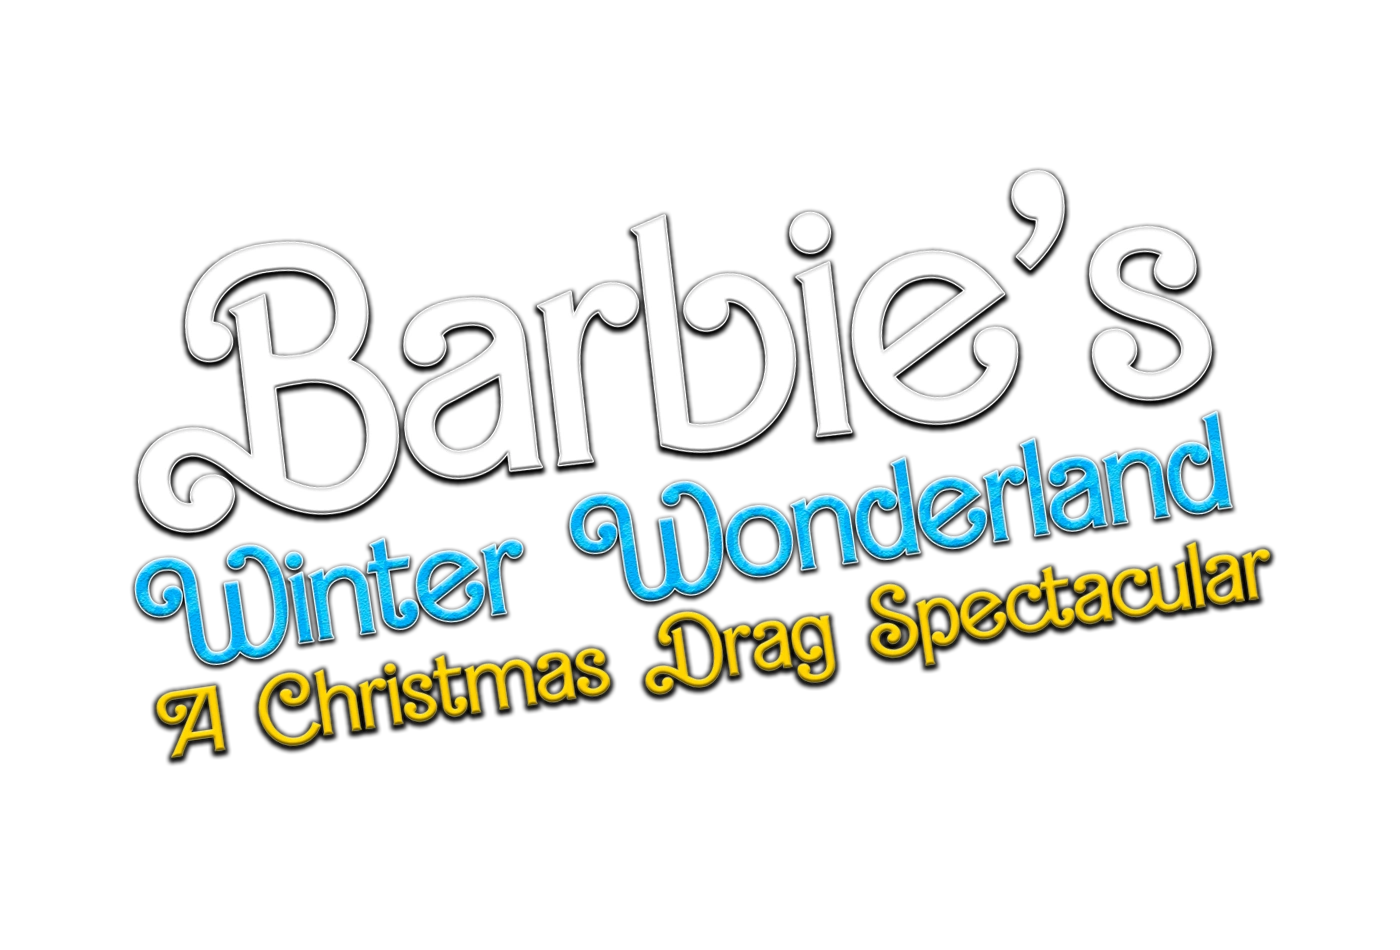 Barbie’s Winter Wonderland: A Christmas Drag Spectacular! 